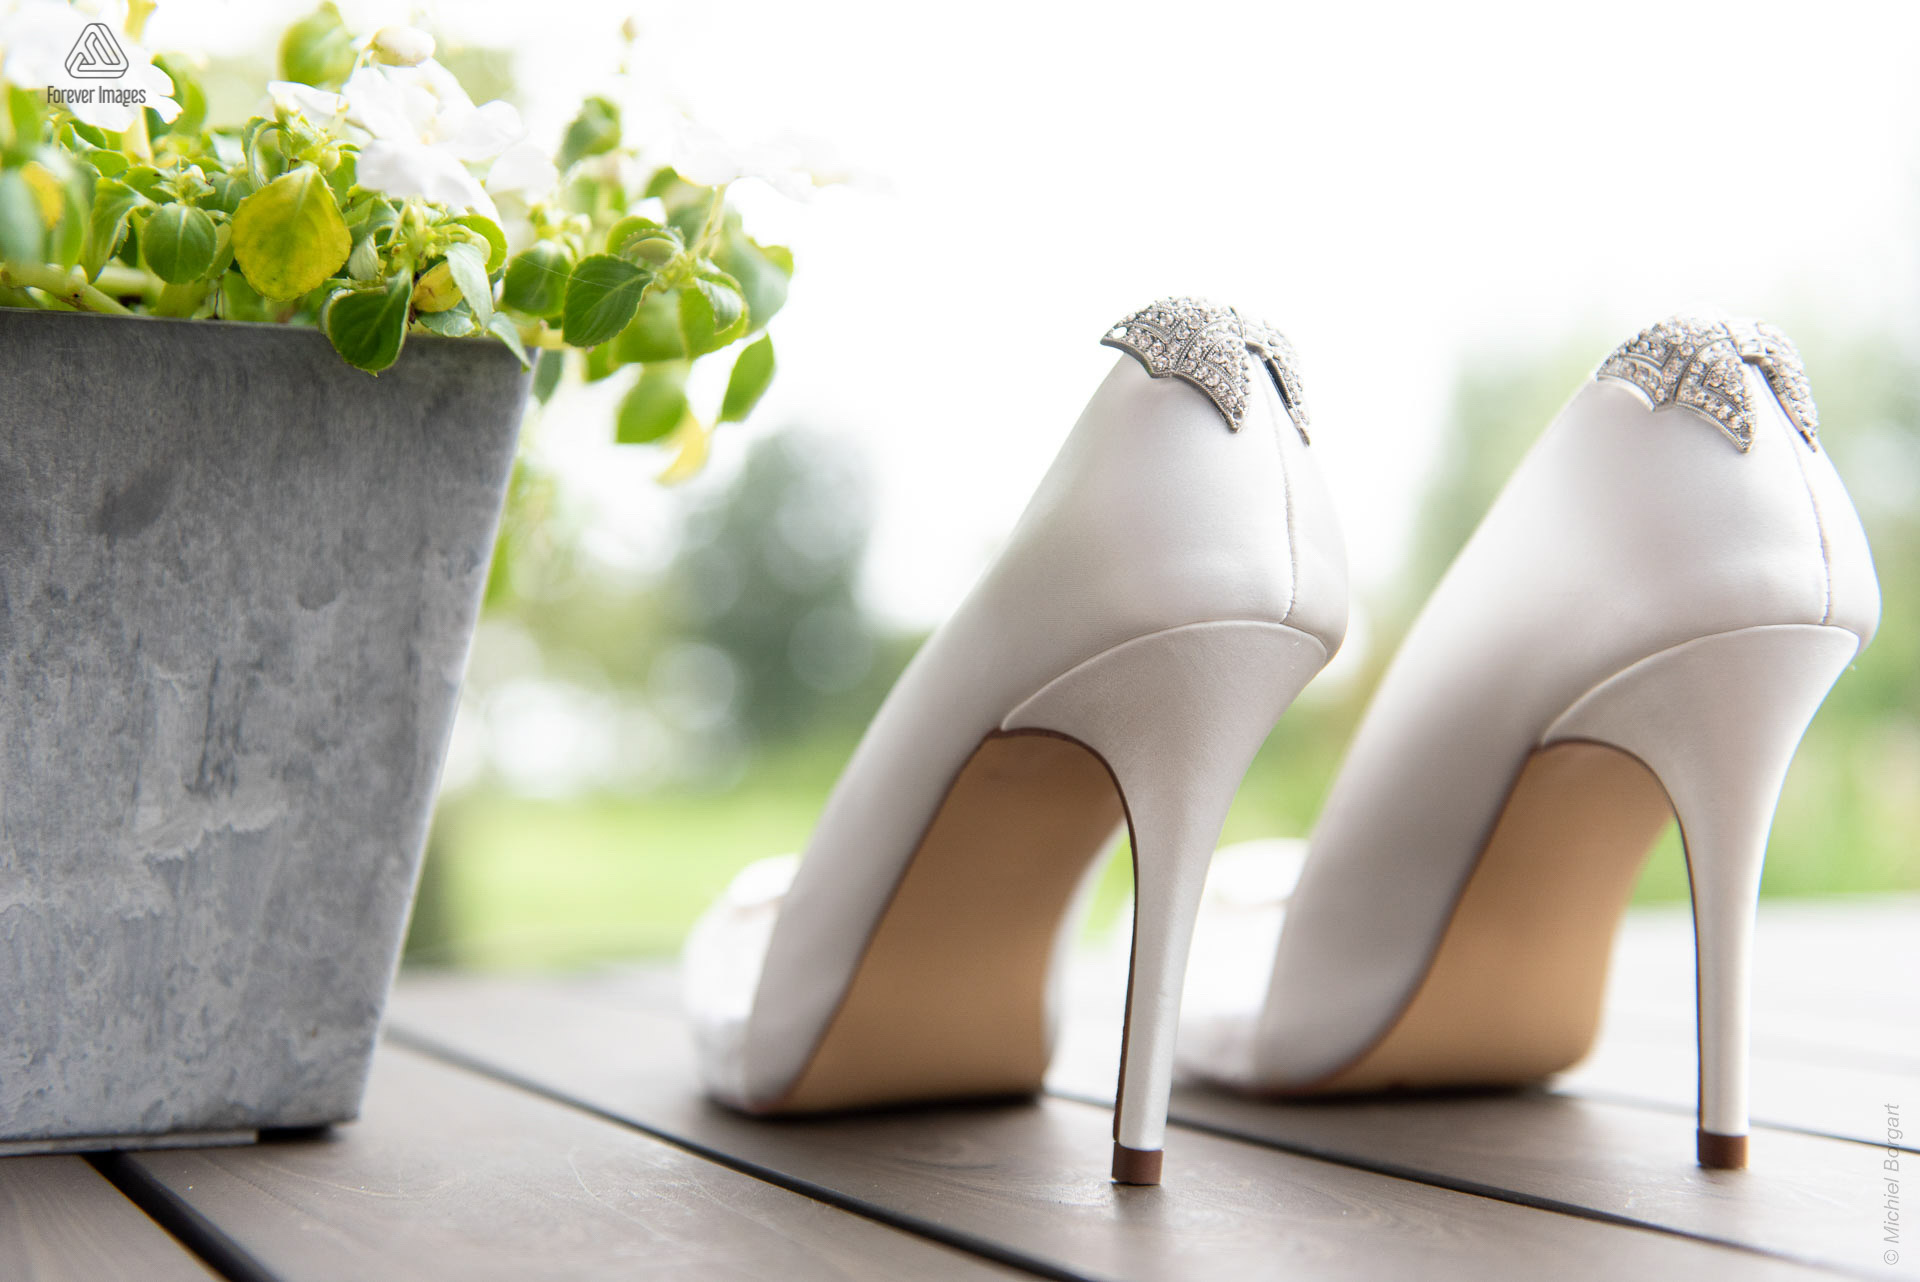 Wedding photo detail bridal shoes white back | Wedding Photographer Michiel Borgart - Forever Images.